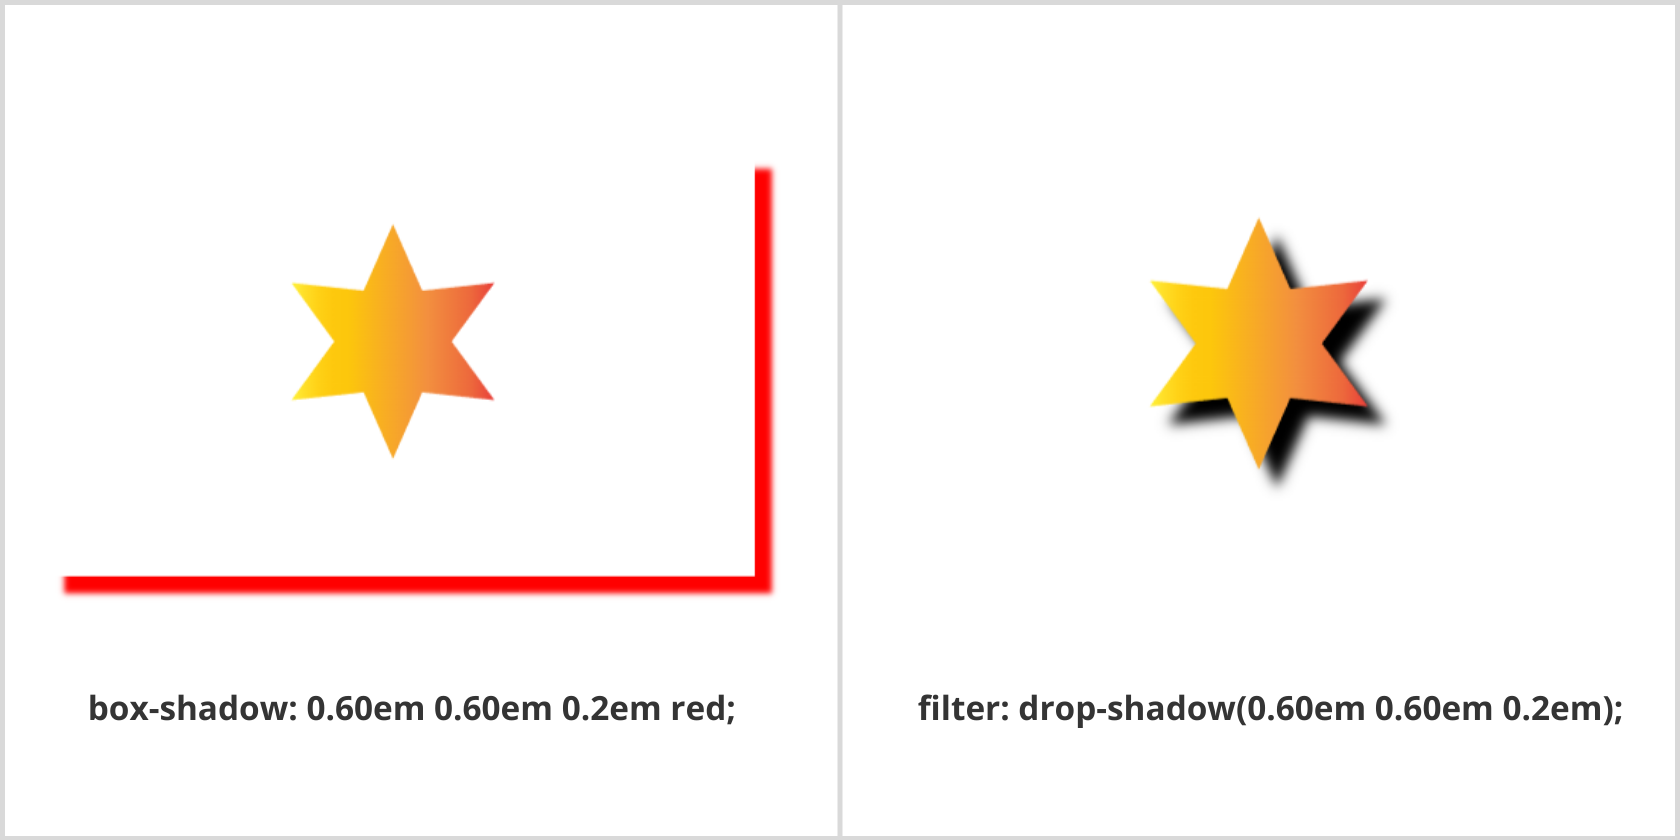 Box-shadow versus drop-shadow on SVG